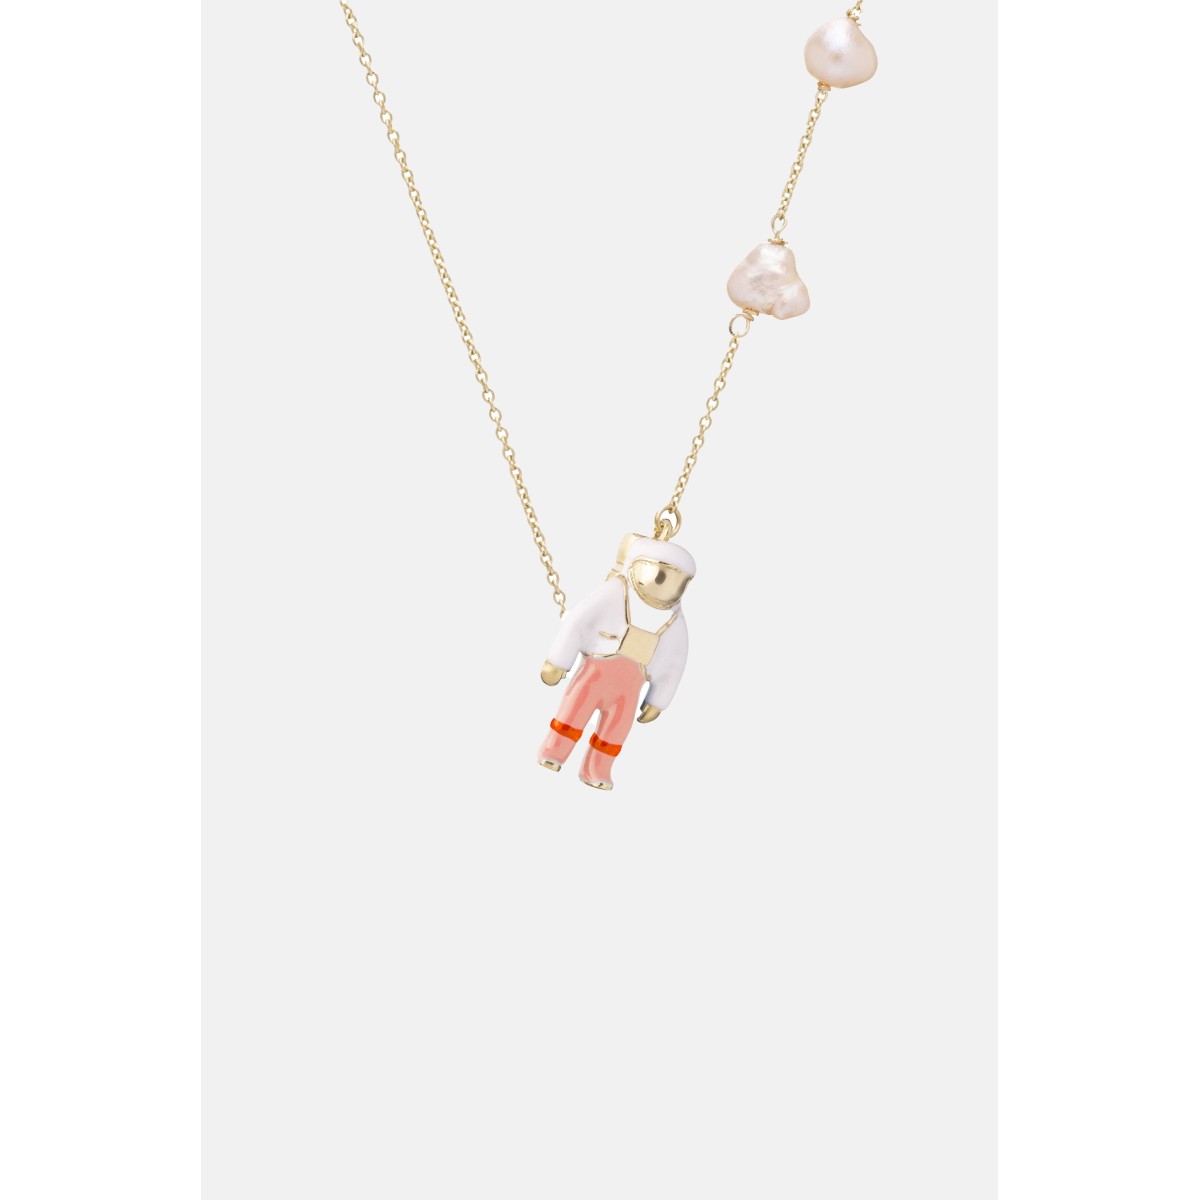 Aliita astronauta enamel perla necklace